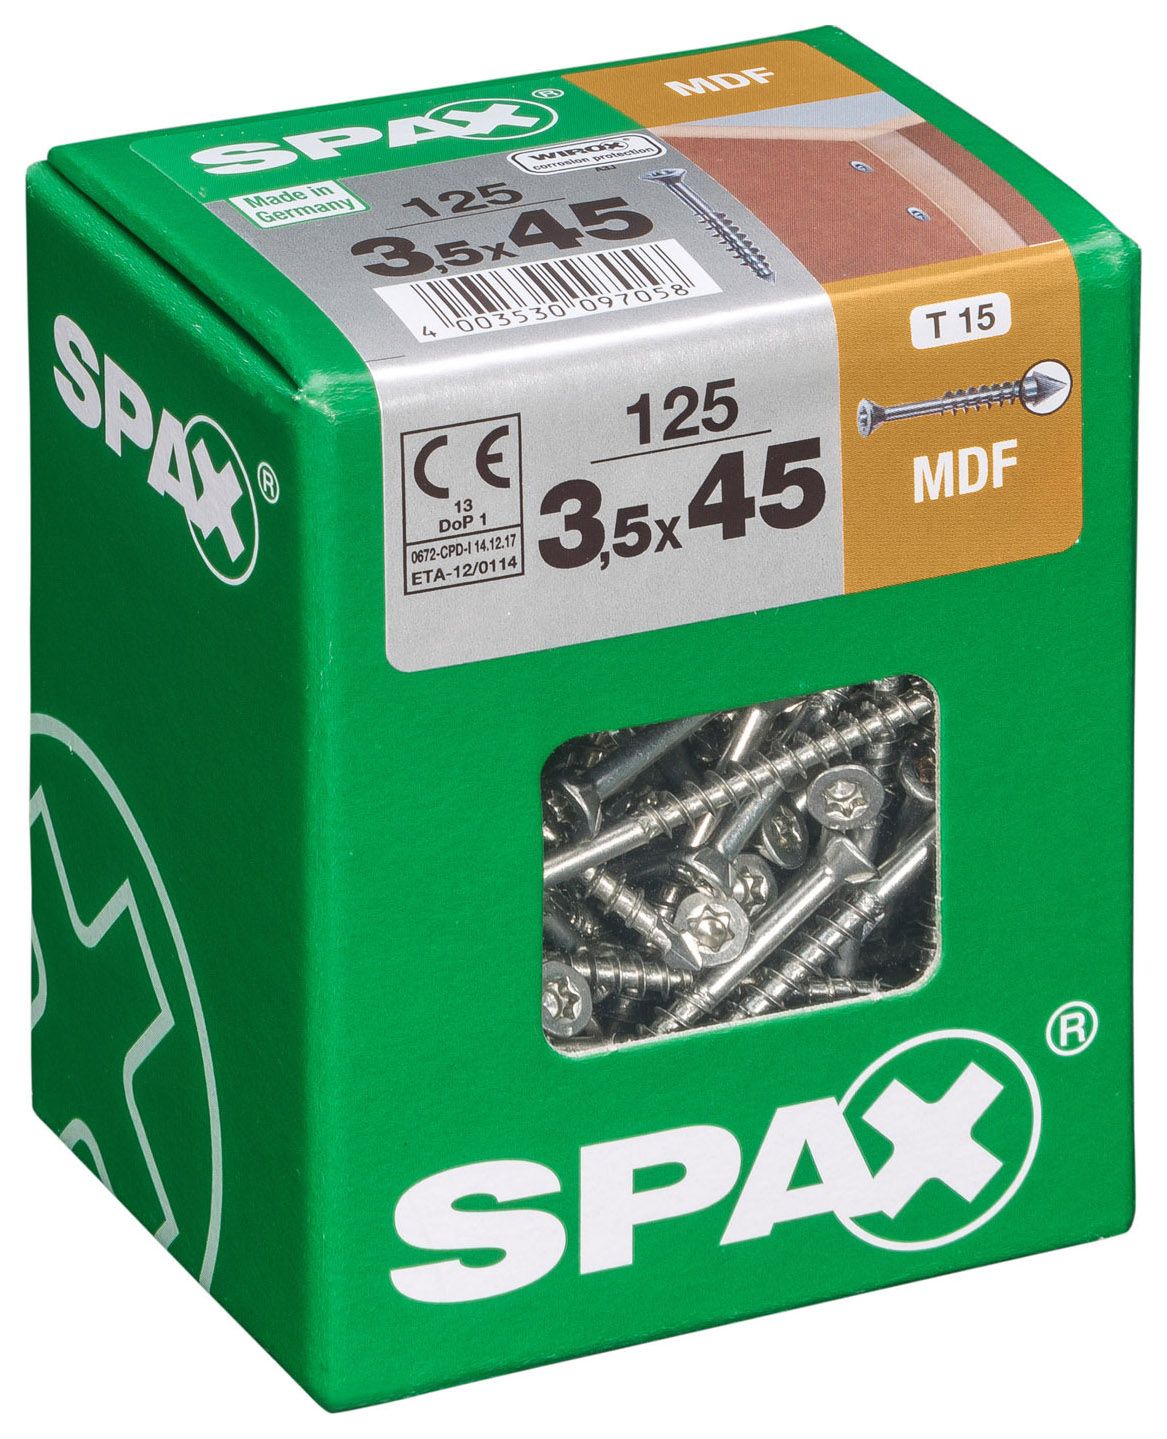 Spax TX Countersunk Blue Zinc MDF Screws - 3.5 x 45mm Pack of 125